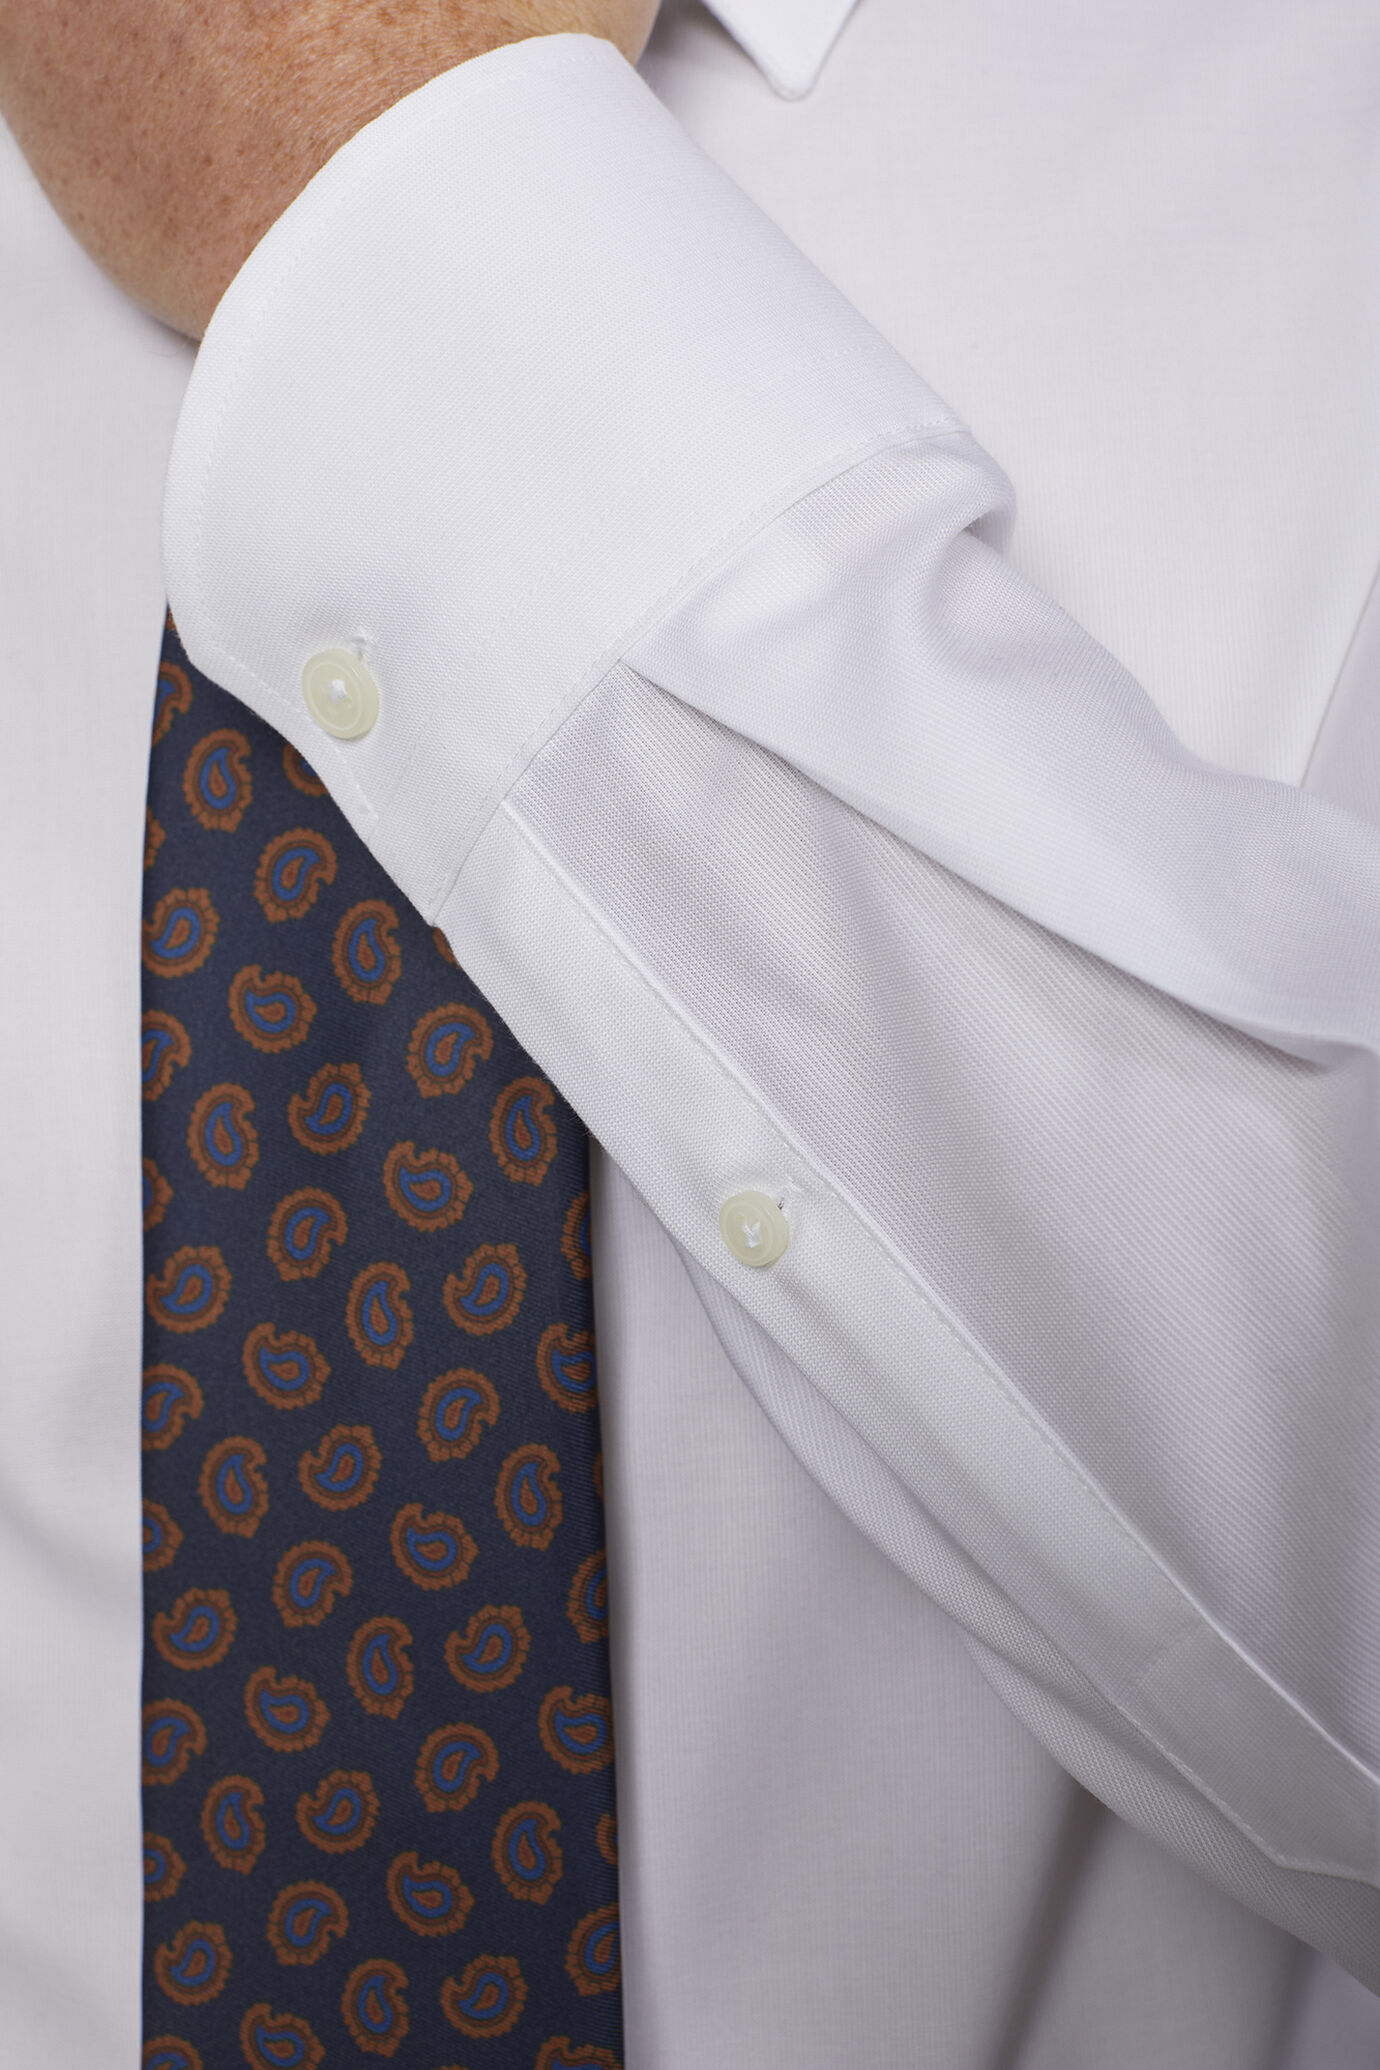 Camicia uomo collo classico 100% cotone tessuto pinpoint tinta unita regular fit image number 4